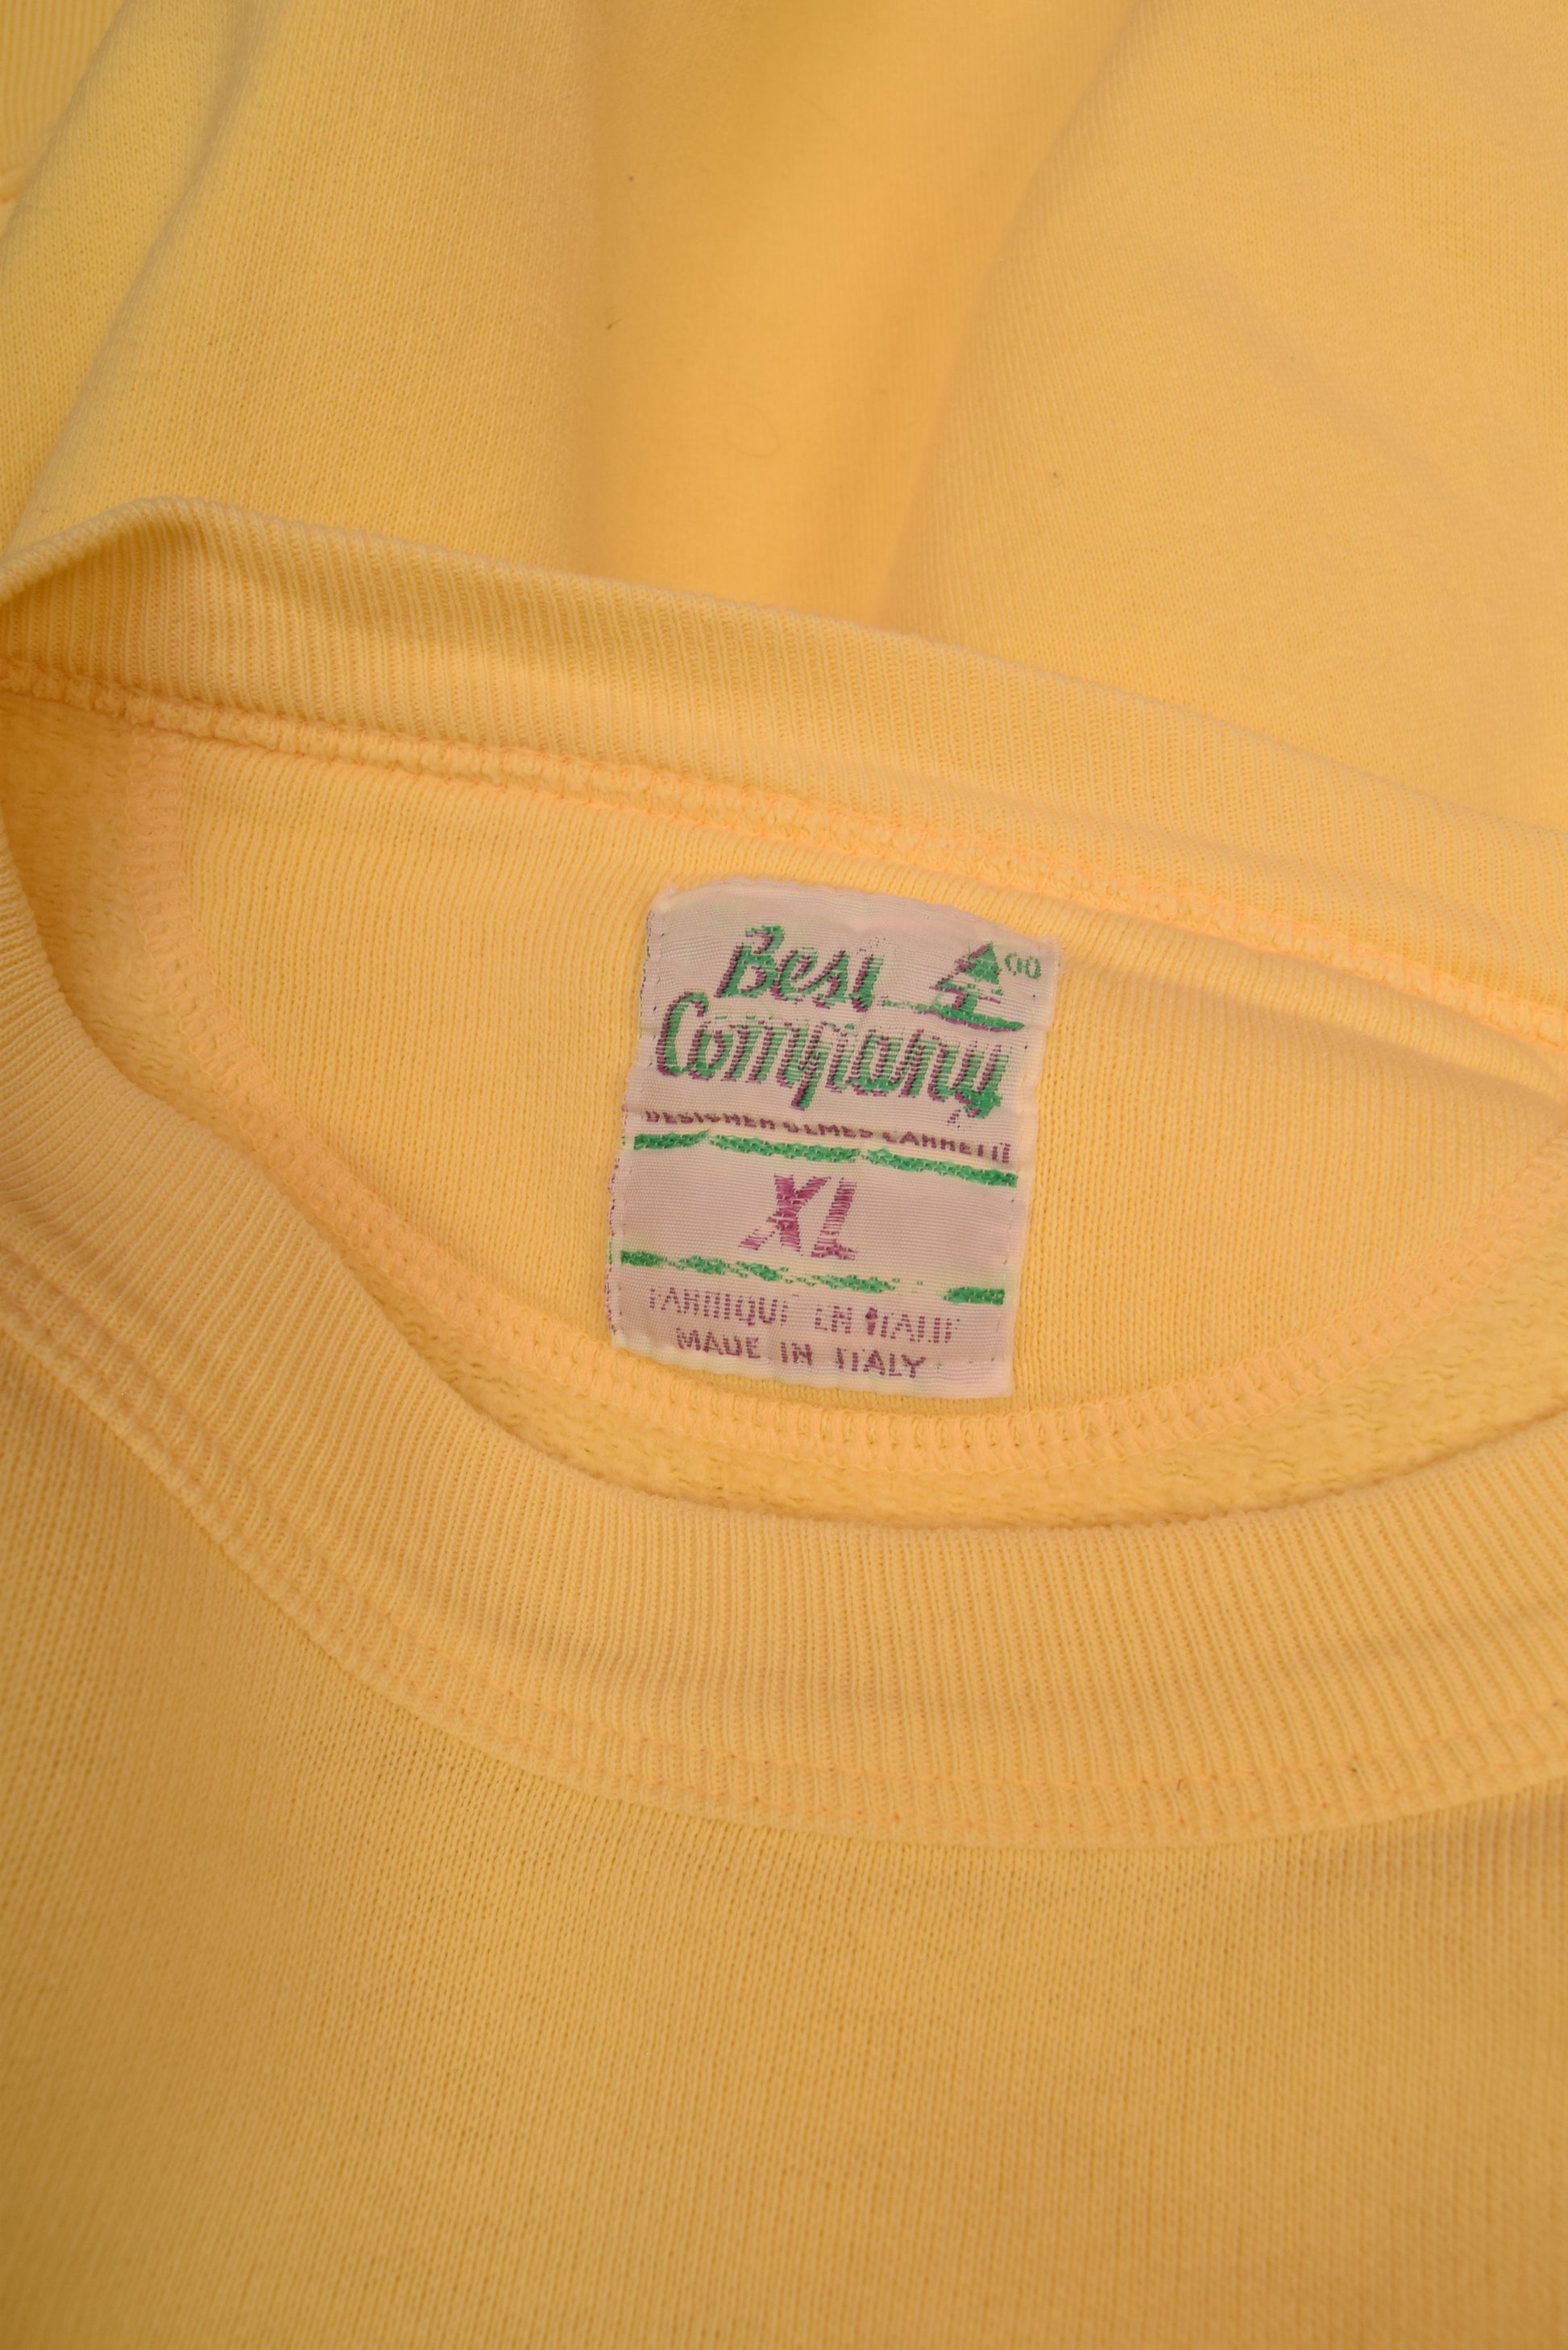 Vintage 80's Best Company Sweatshirt Crewneck Ski Team Squaw Valley California USA Made in USA Size XL